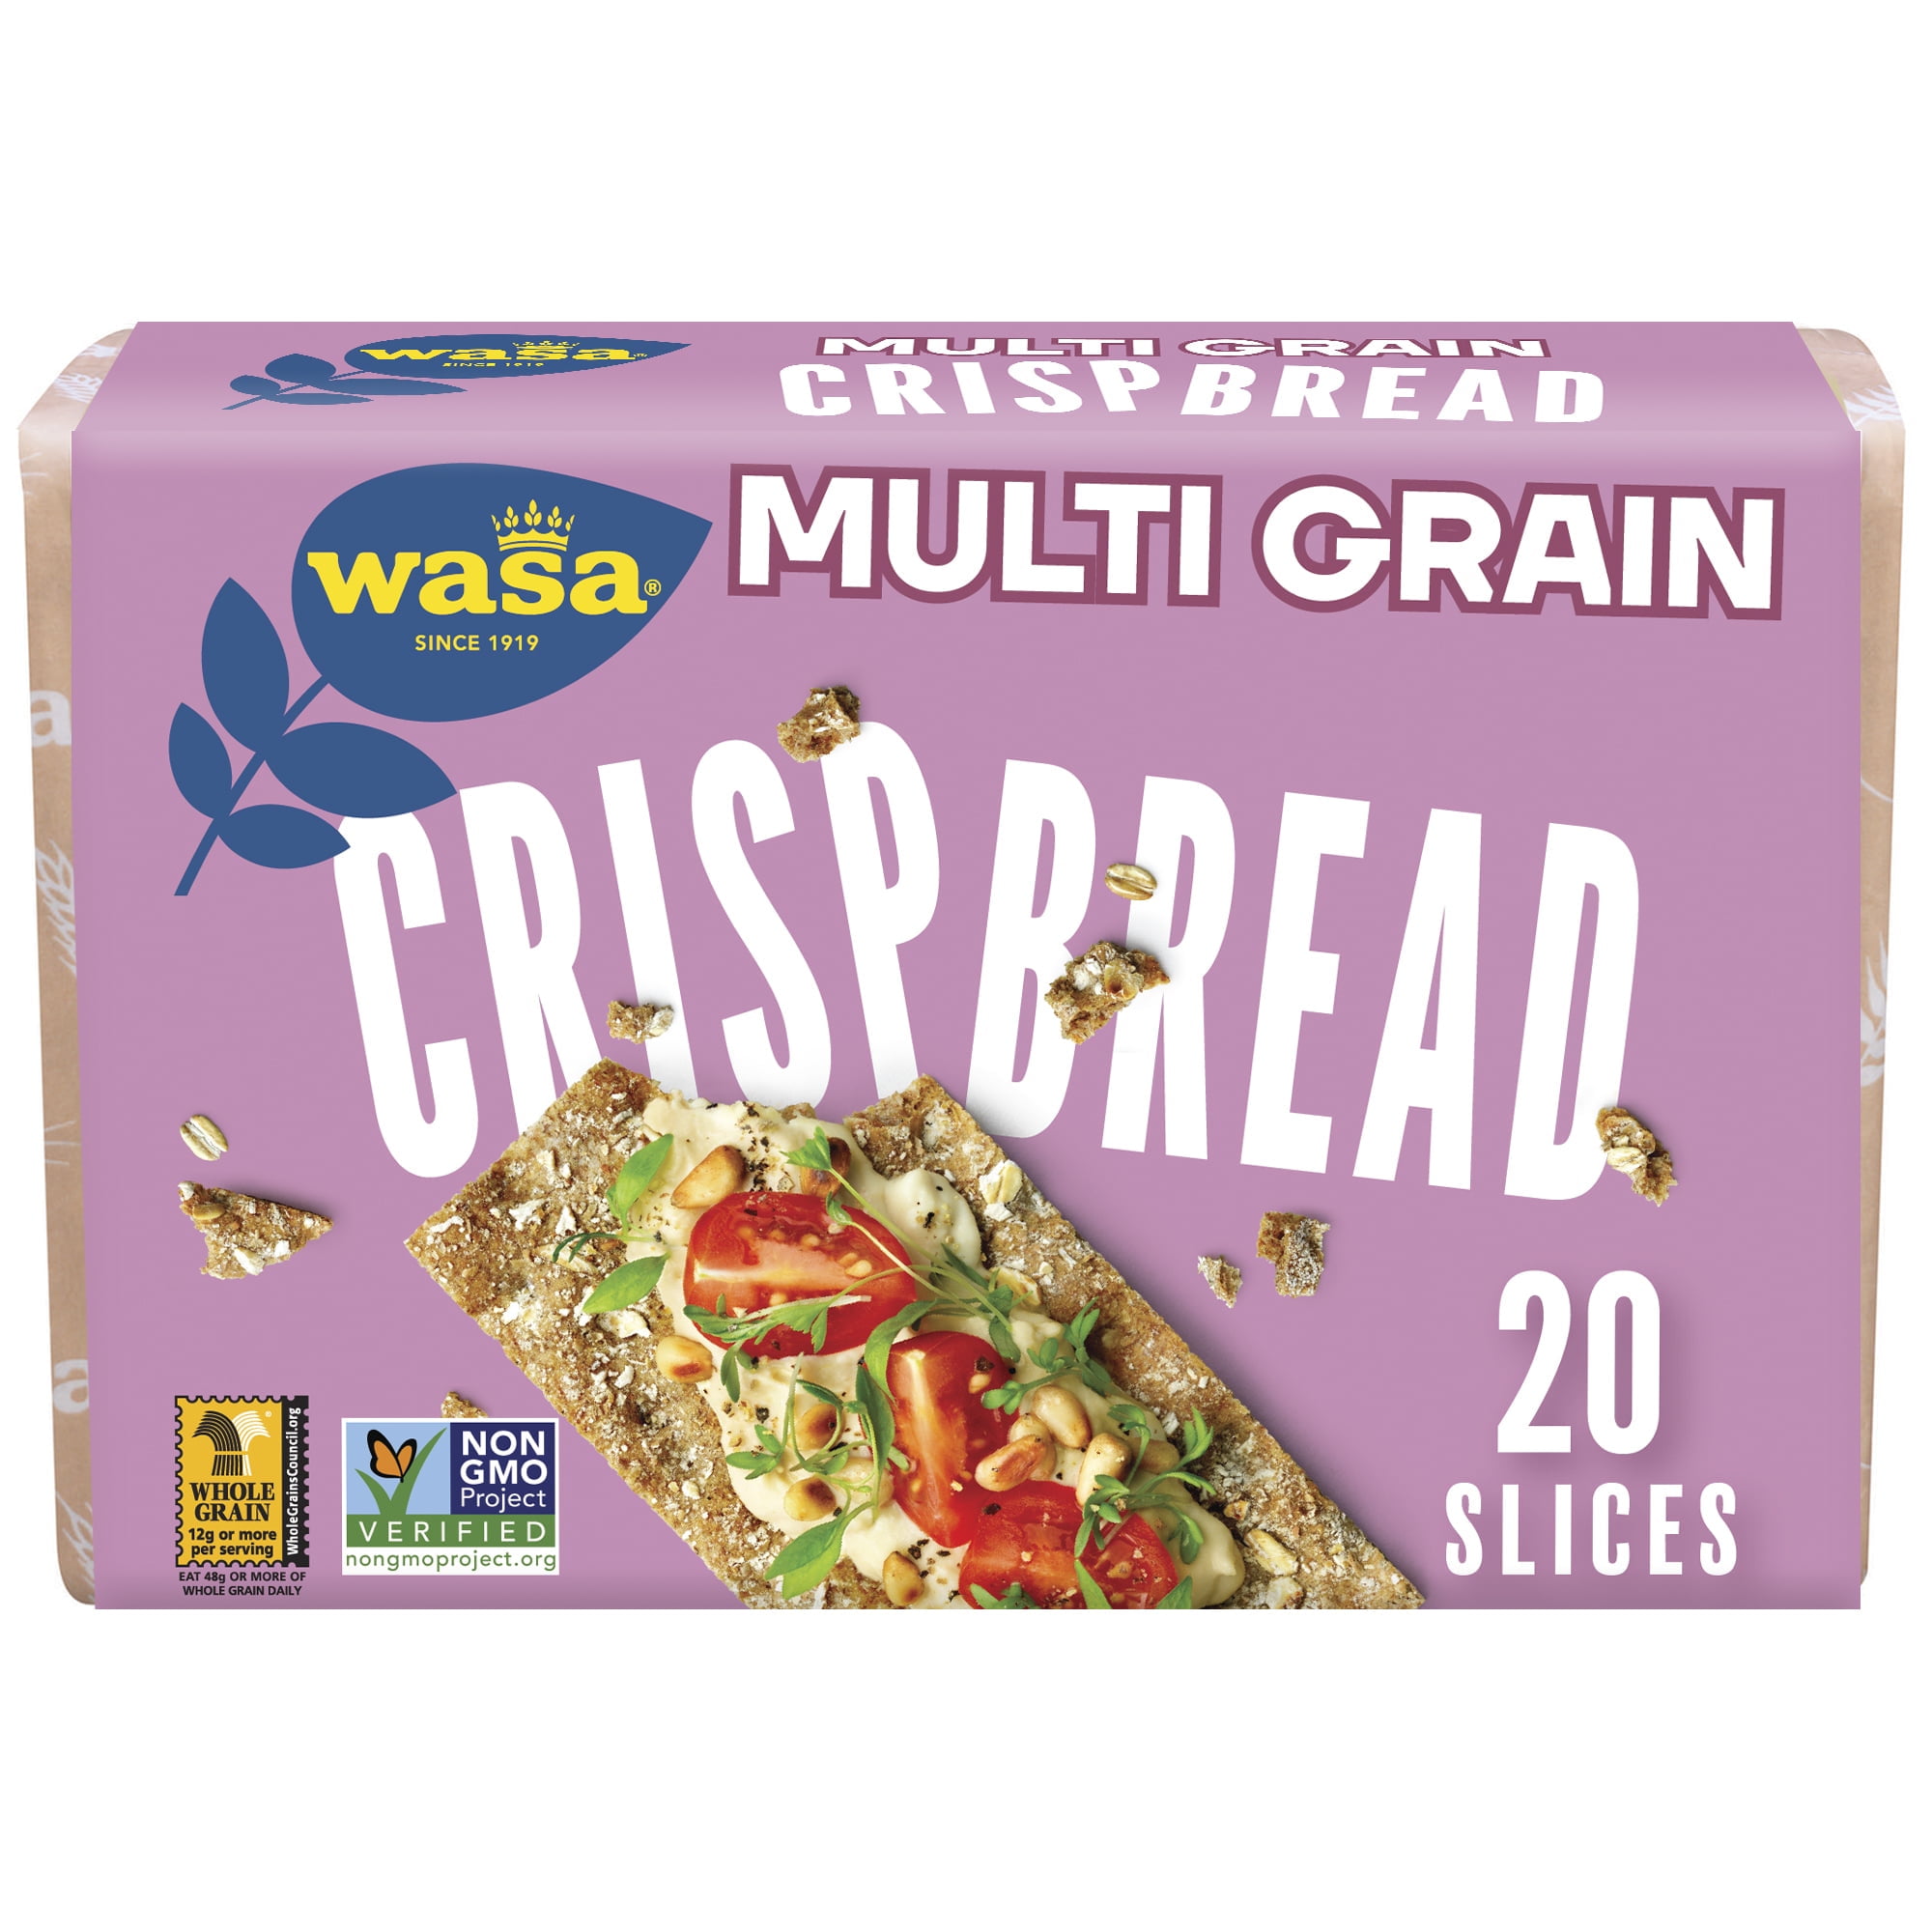 Wasa Crispbread, Whole Grain, Multi Grain - 9.7 oz